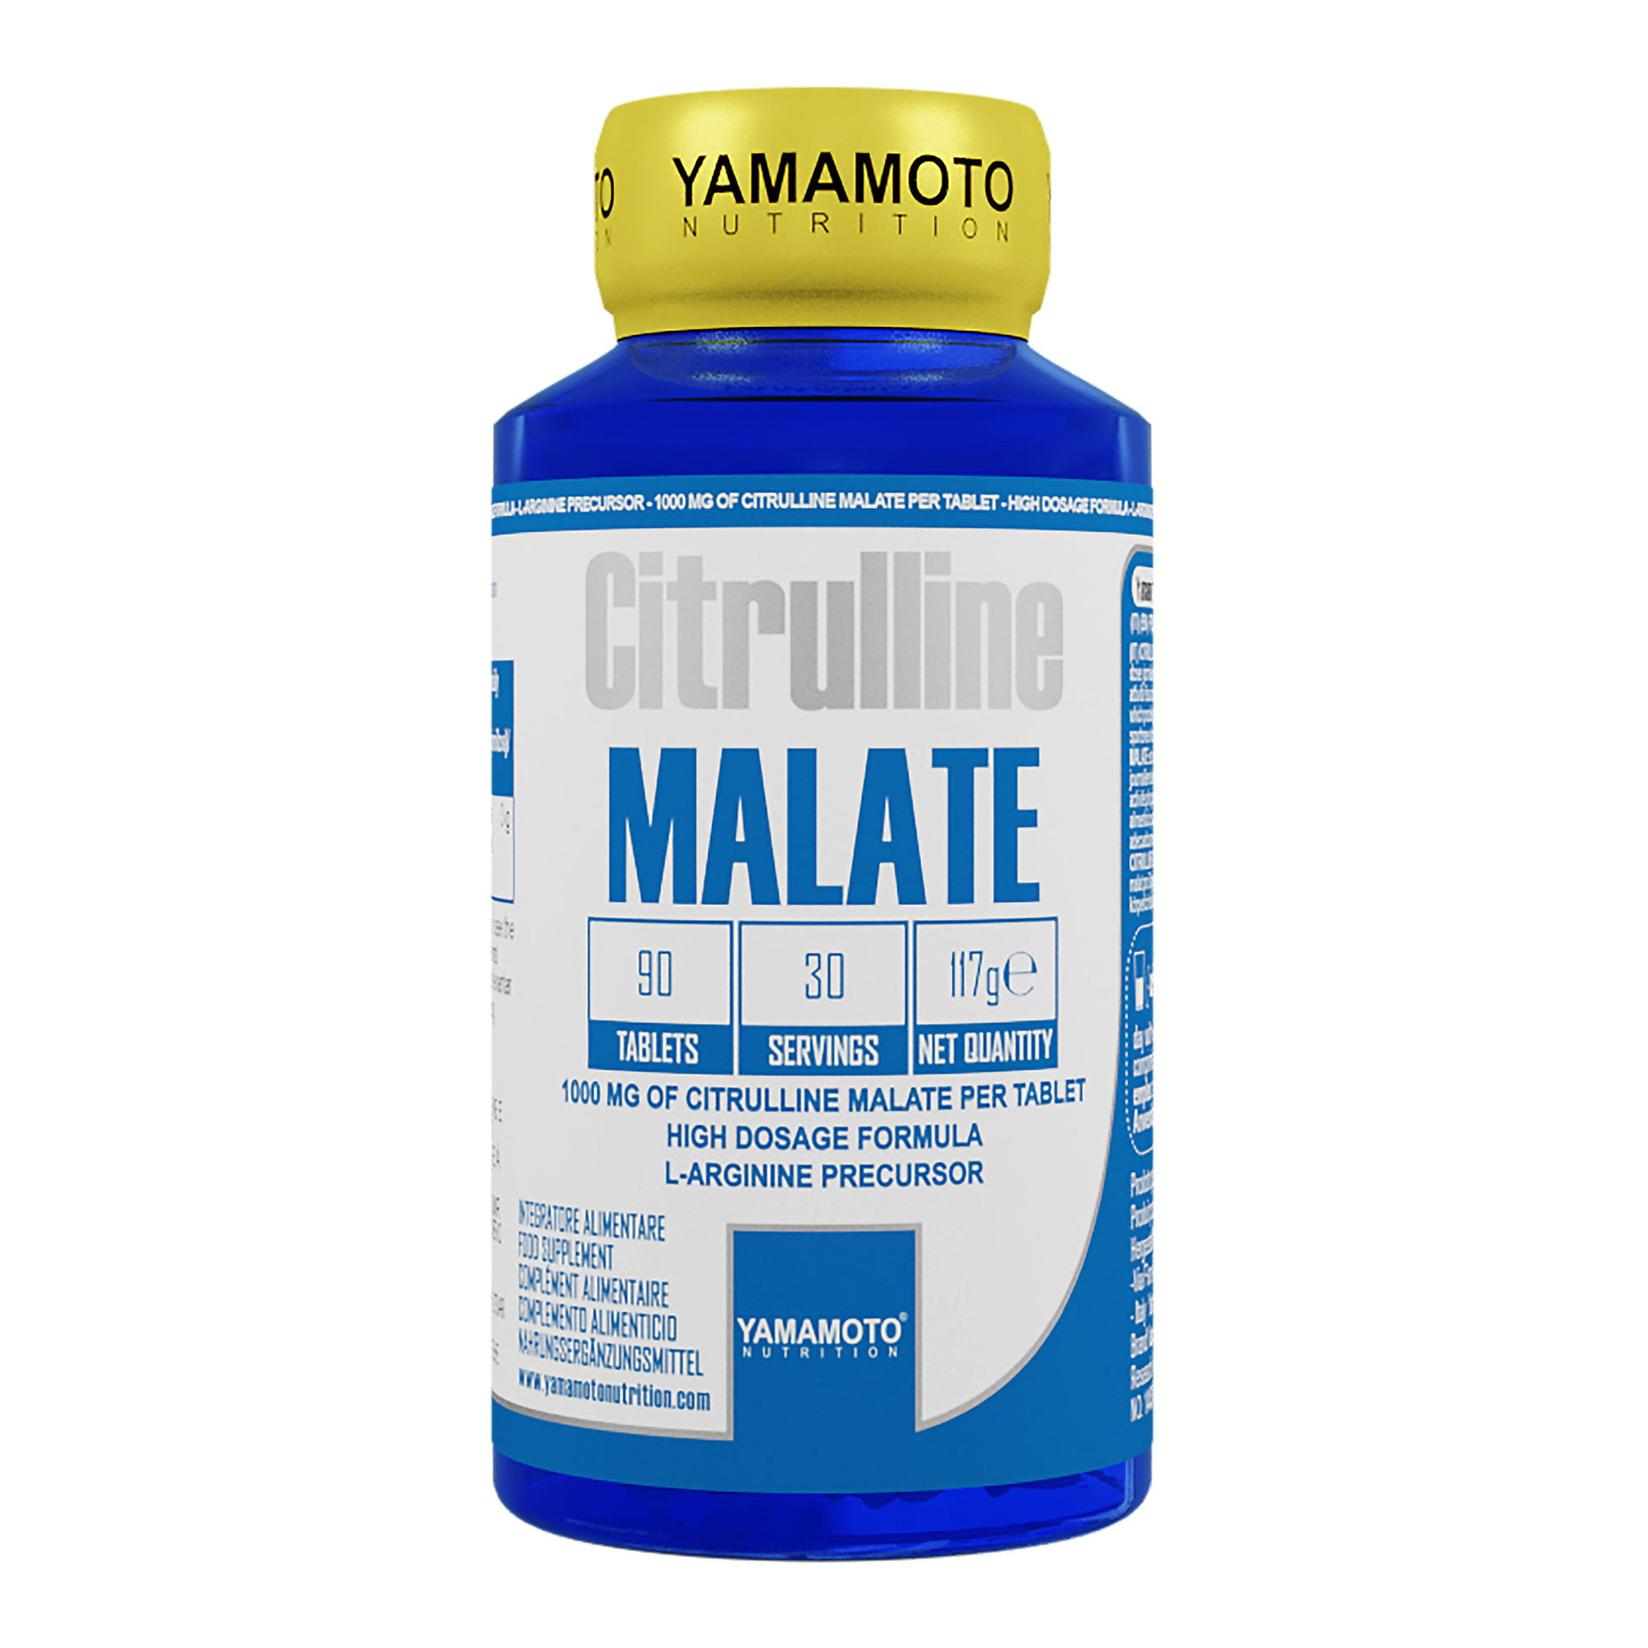 YAMAMOTO Citrulline Malate 90caplets